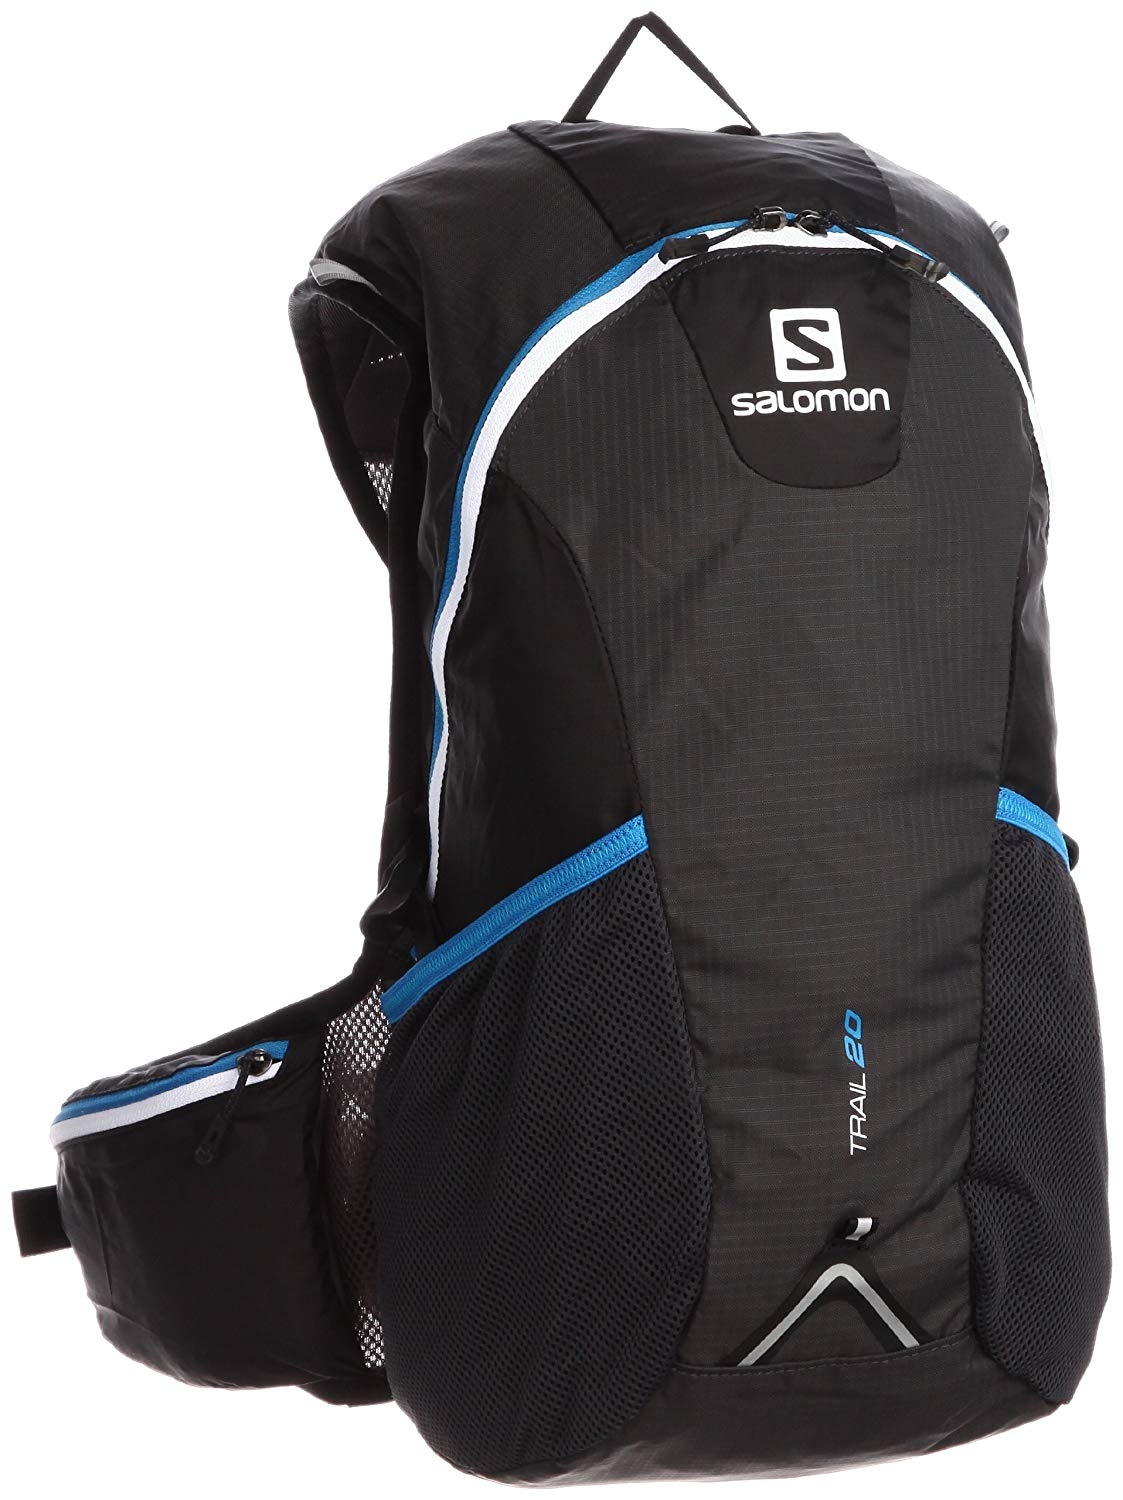 salomon trail 20 backpack